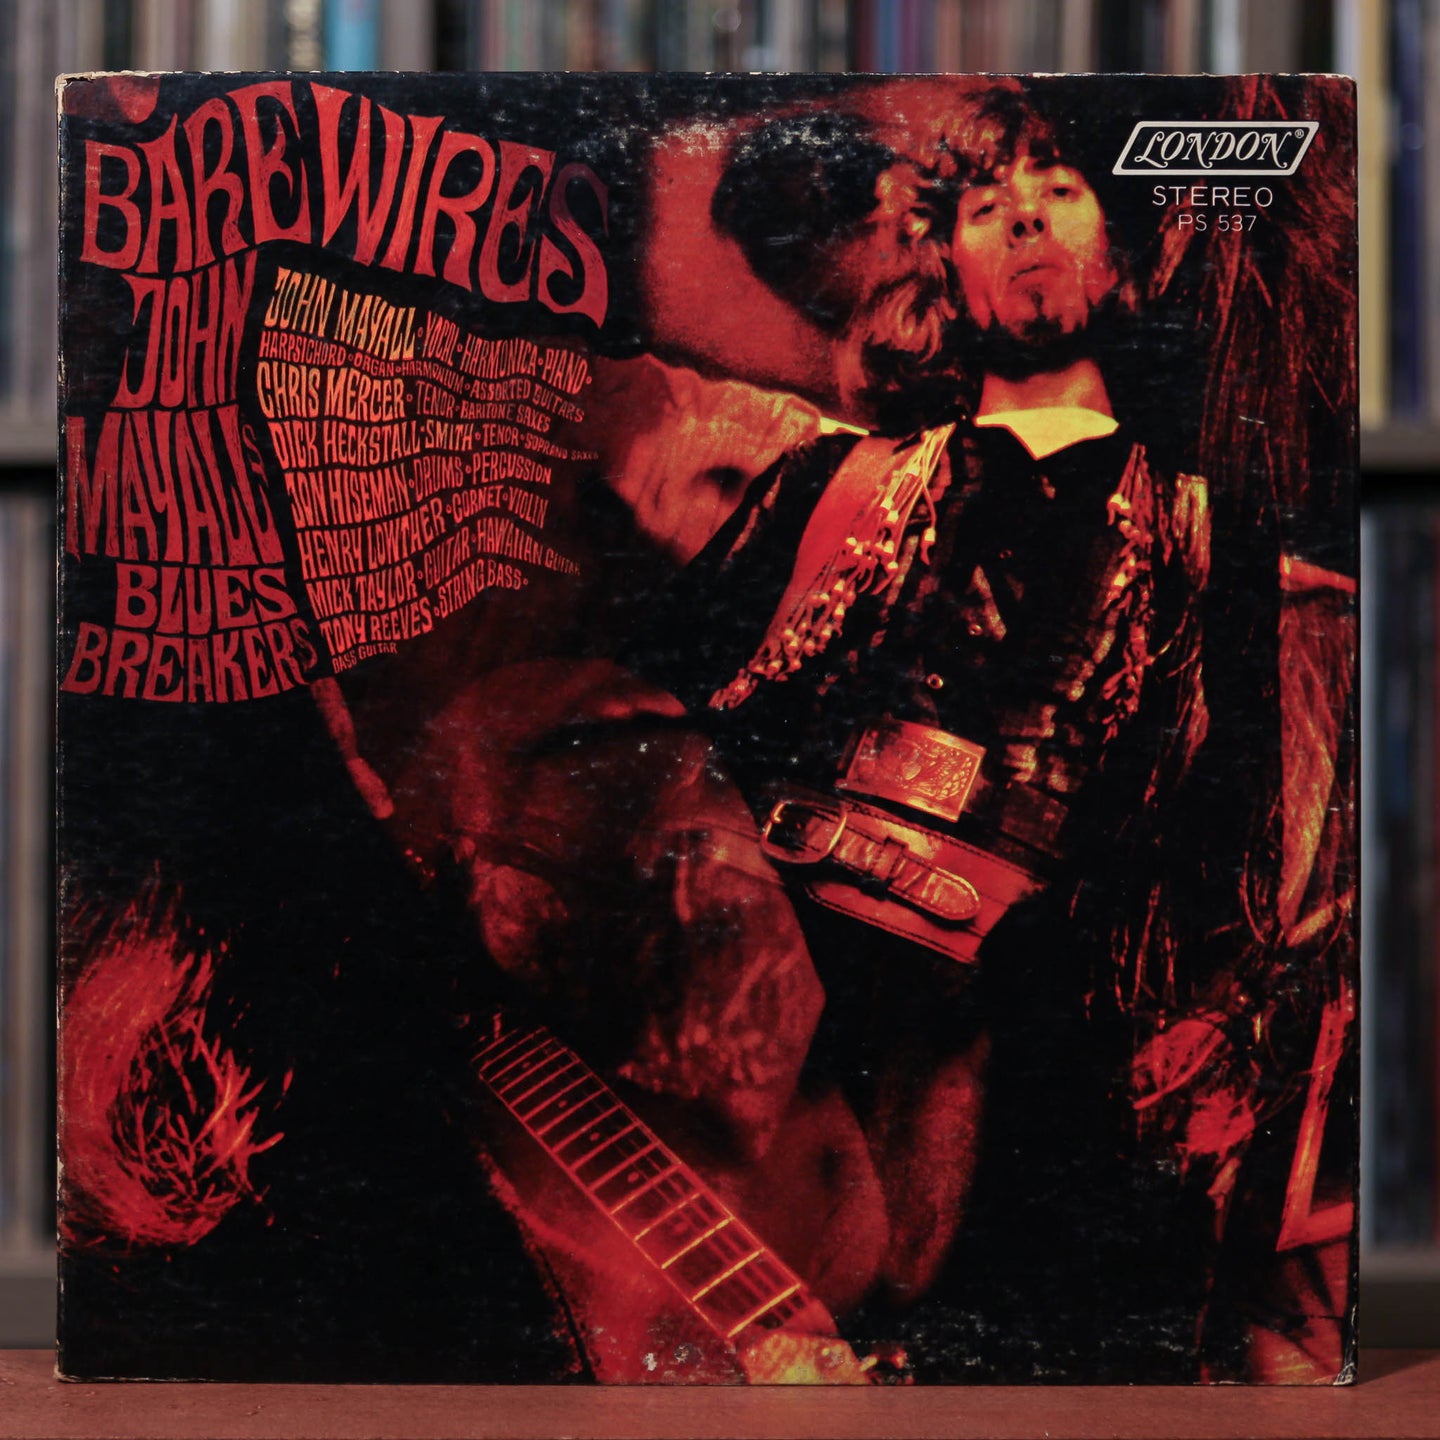 John Mayall's Bluesbreakers - Bare Wires - 1968 London, VG+/VG